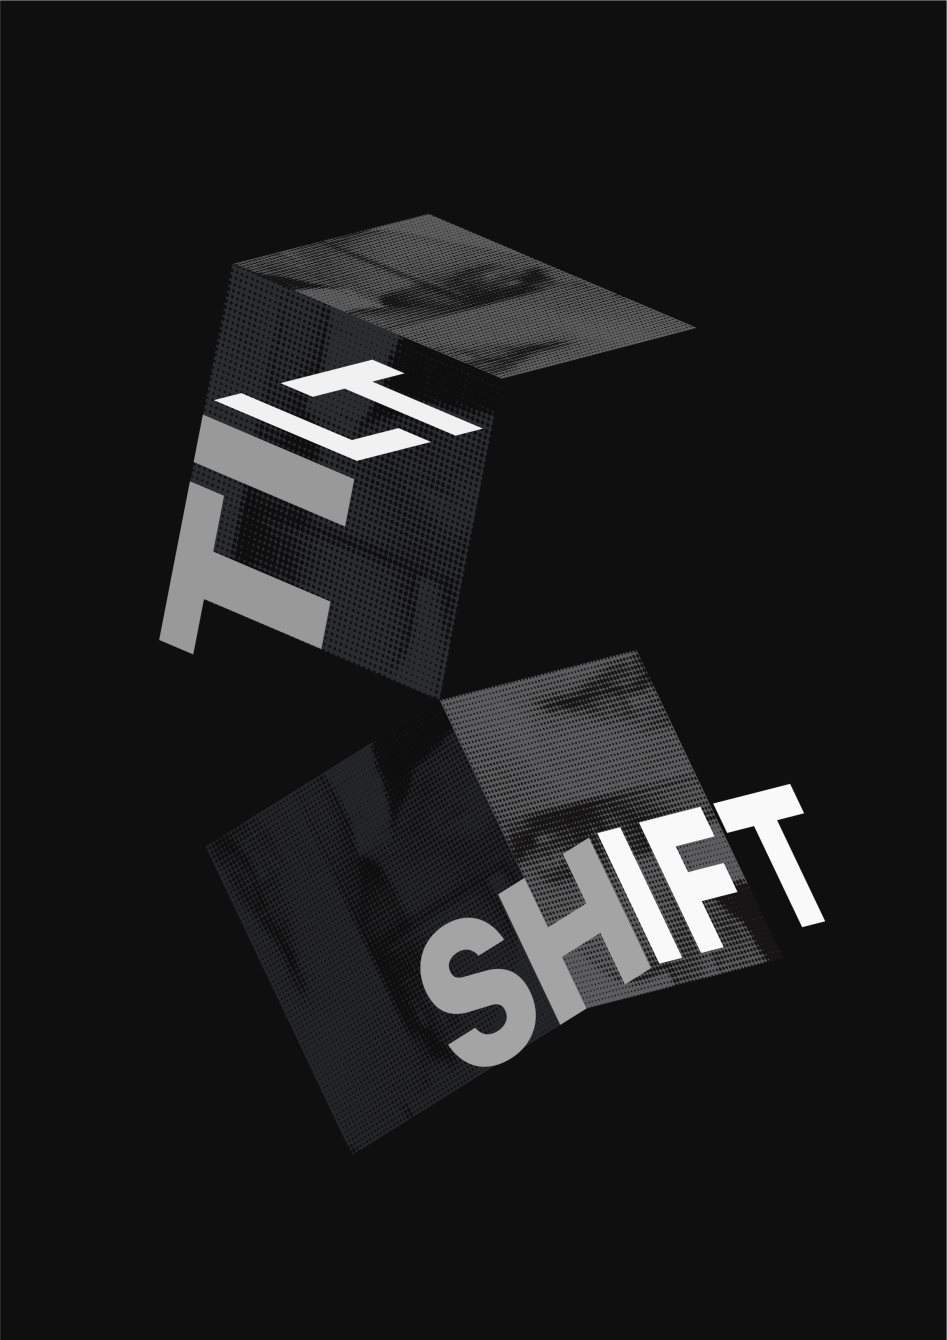 Tilt Shift (Launch Party) Free Entry - Página trasera